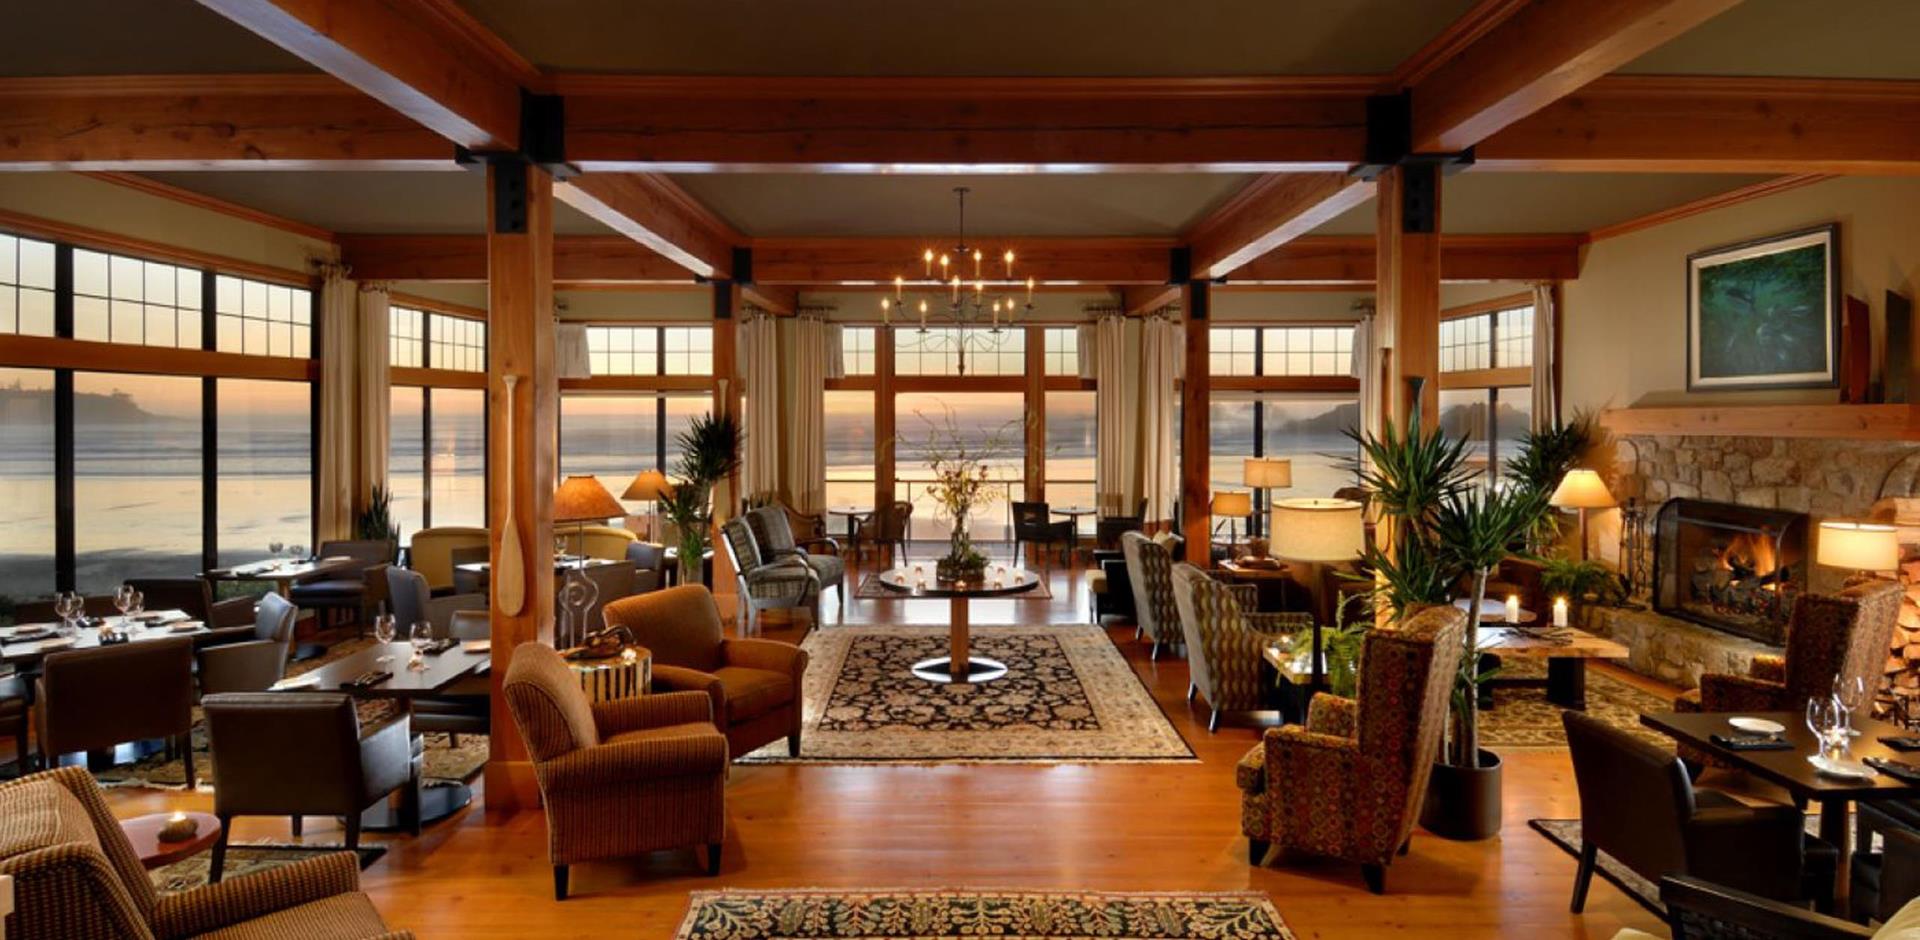 Great Room, Long Beach Lodge Resort, Vancouver Island, A&K